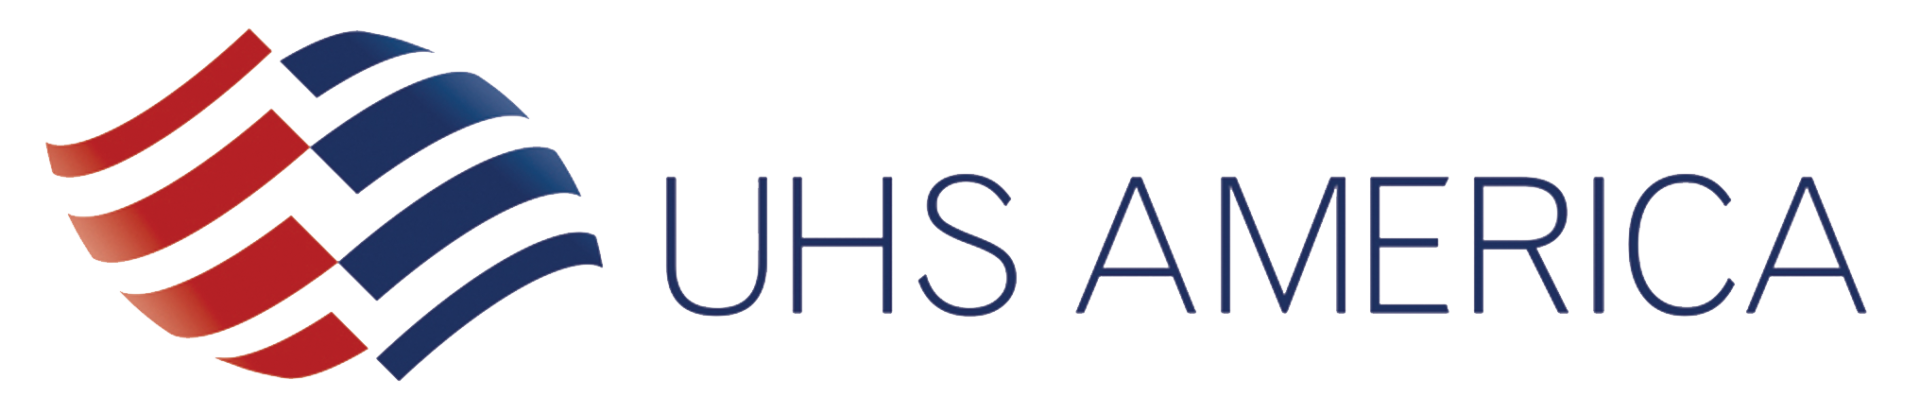 UHS America_logo